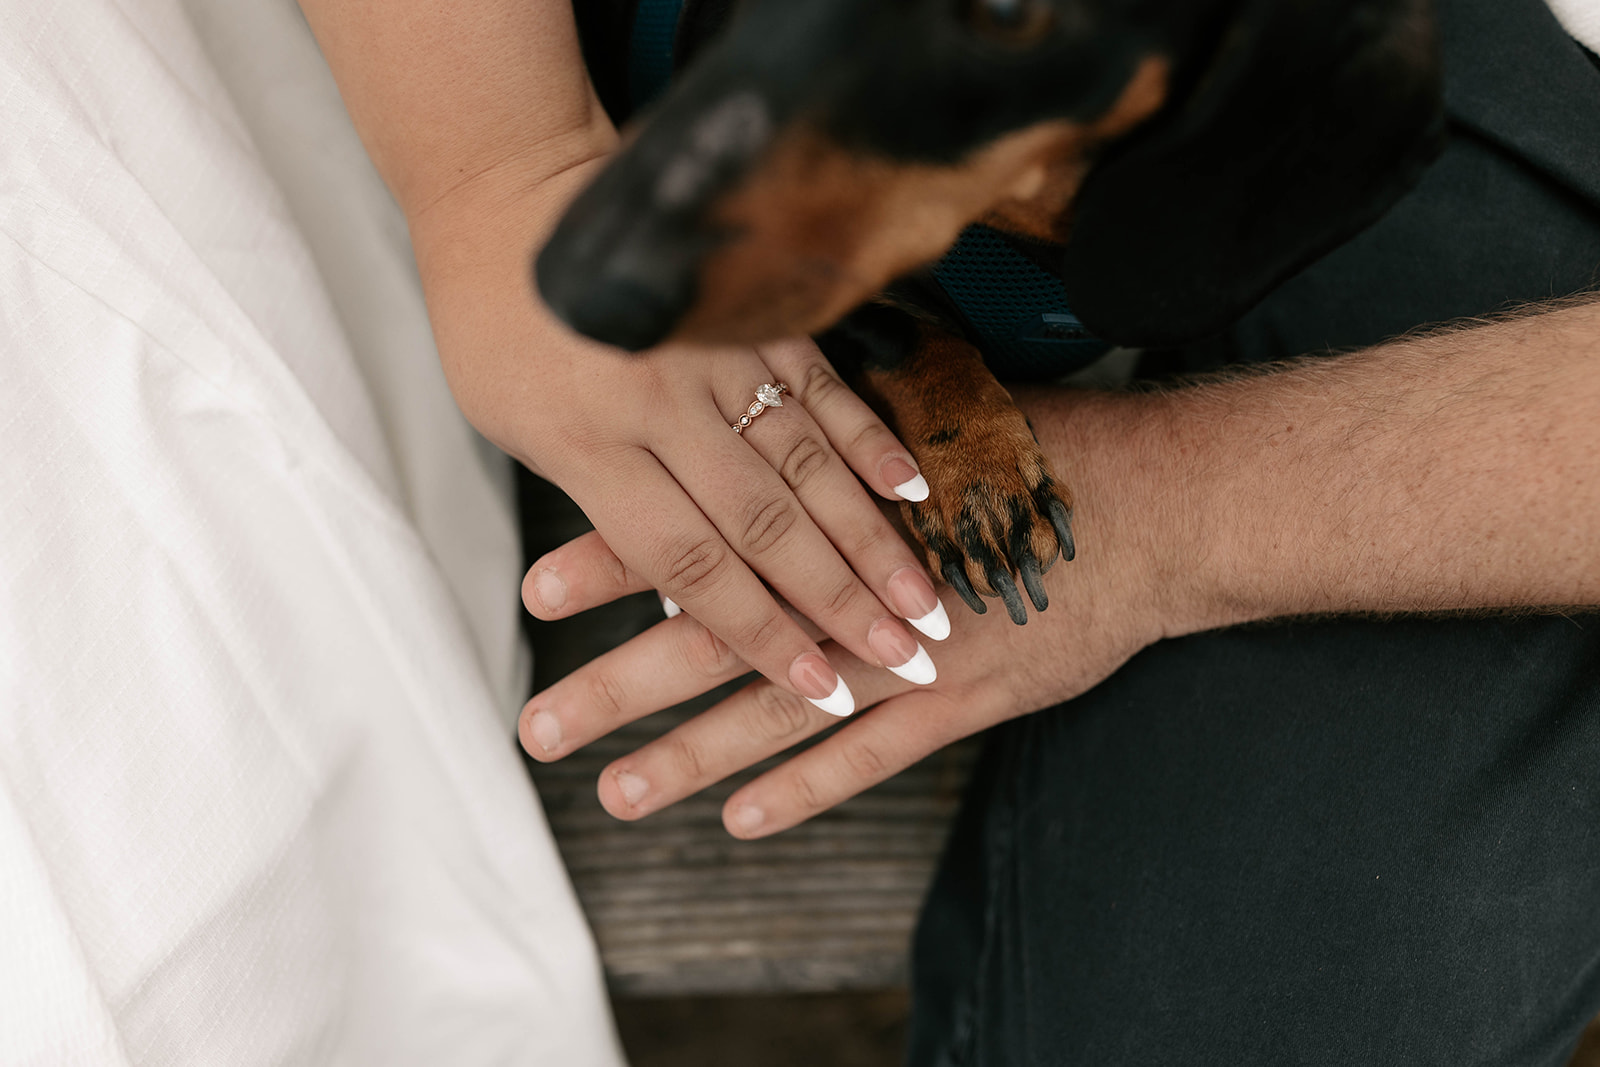 carmel by the sea carmel beach california engagement with dog engagement ring photoshoot ideas wedding ring diamond